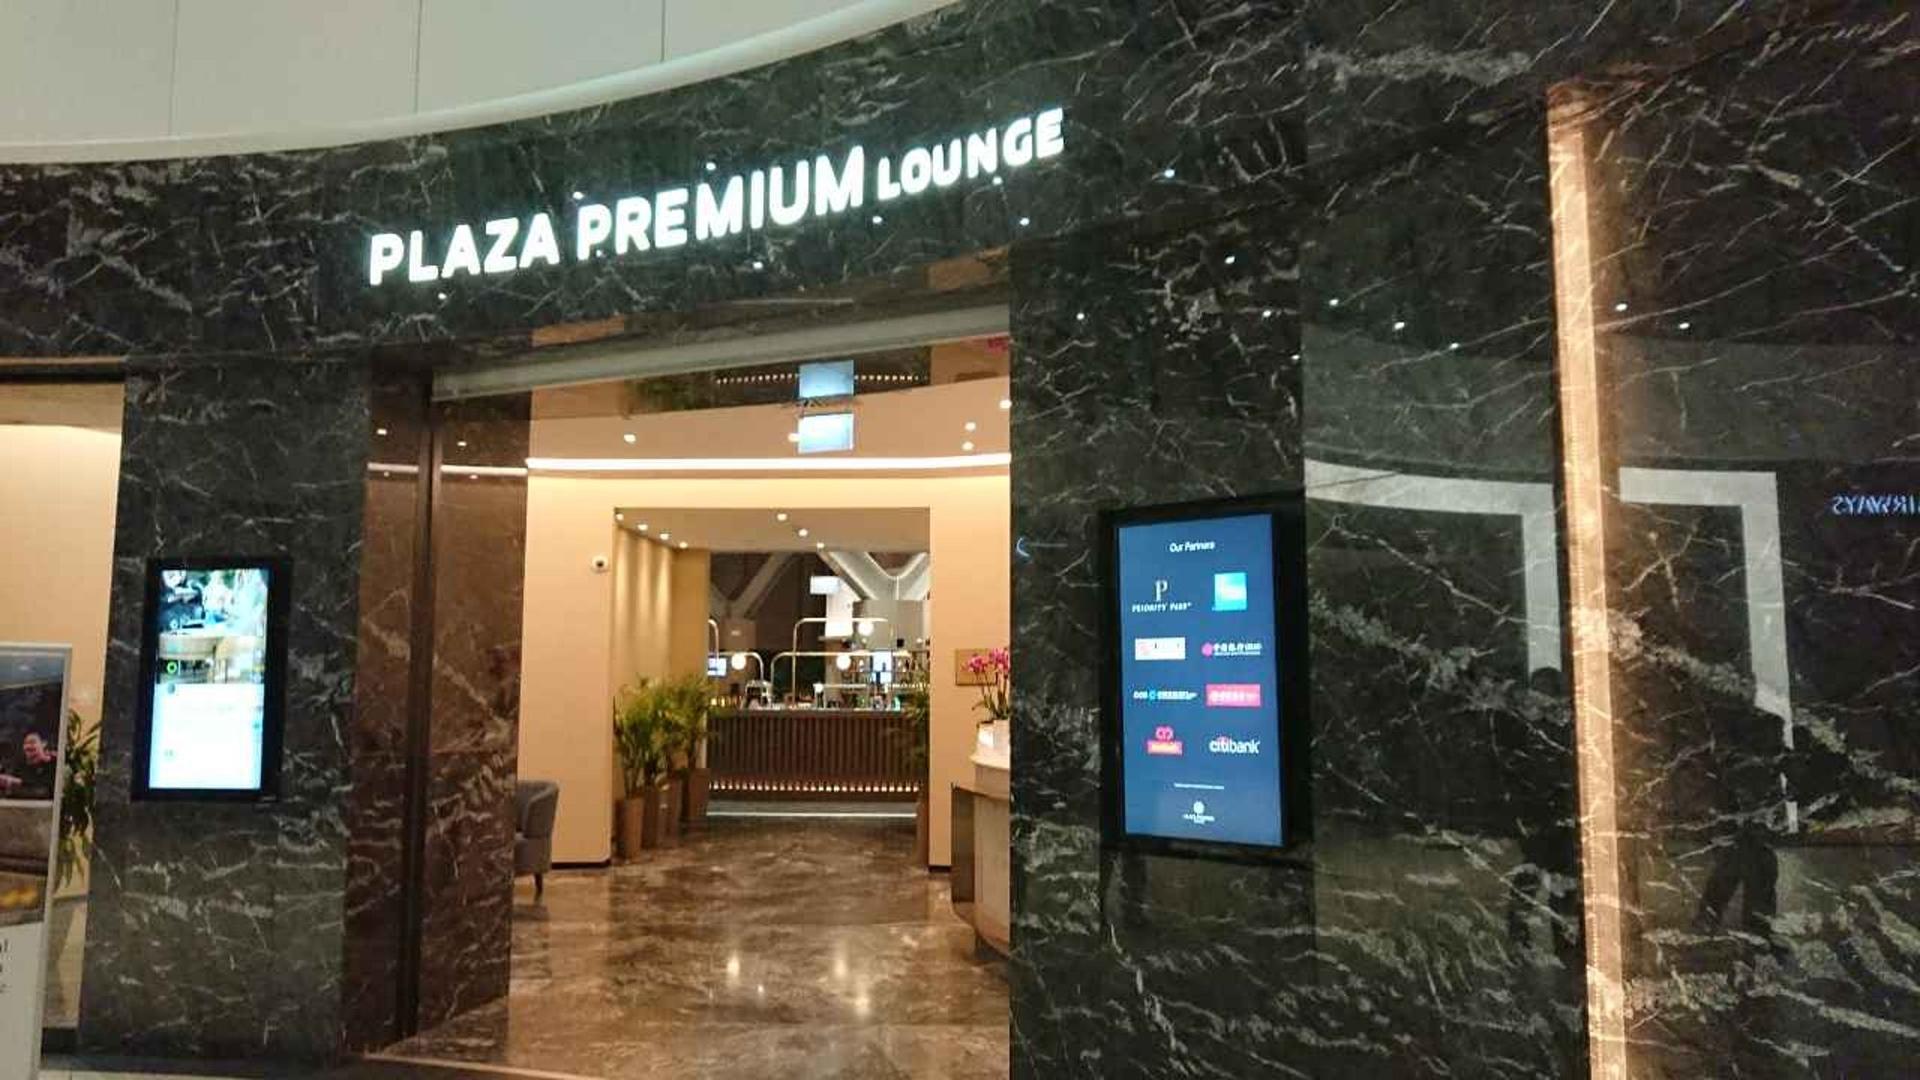 Plaza Premium Lounge image 32 of 54